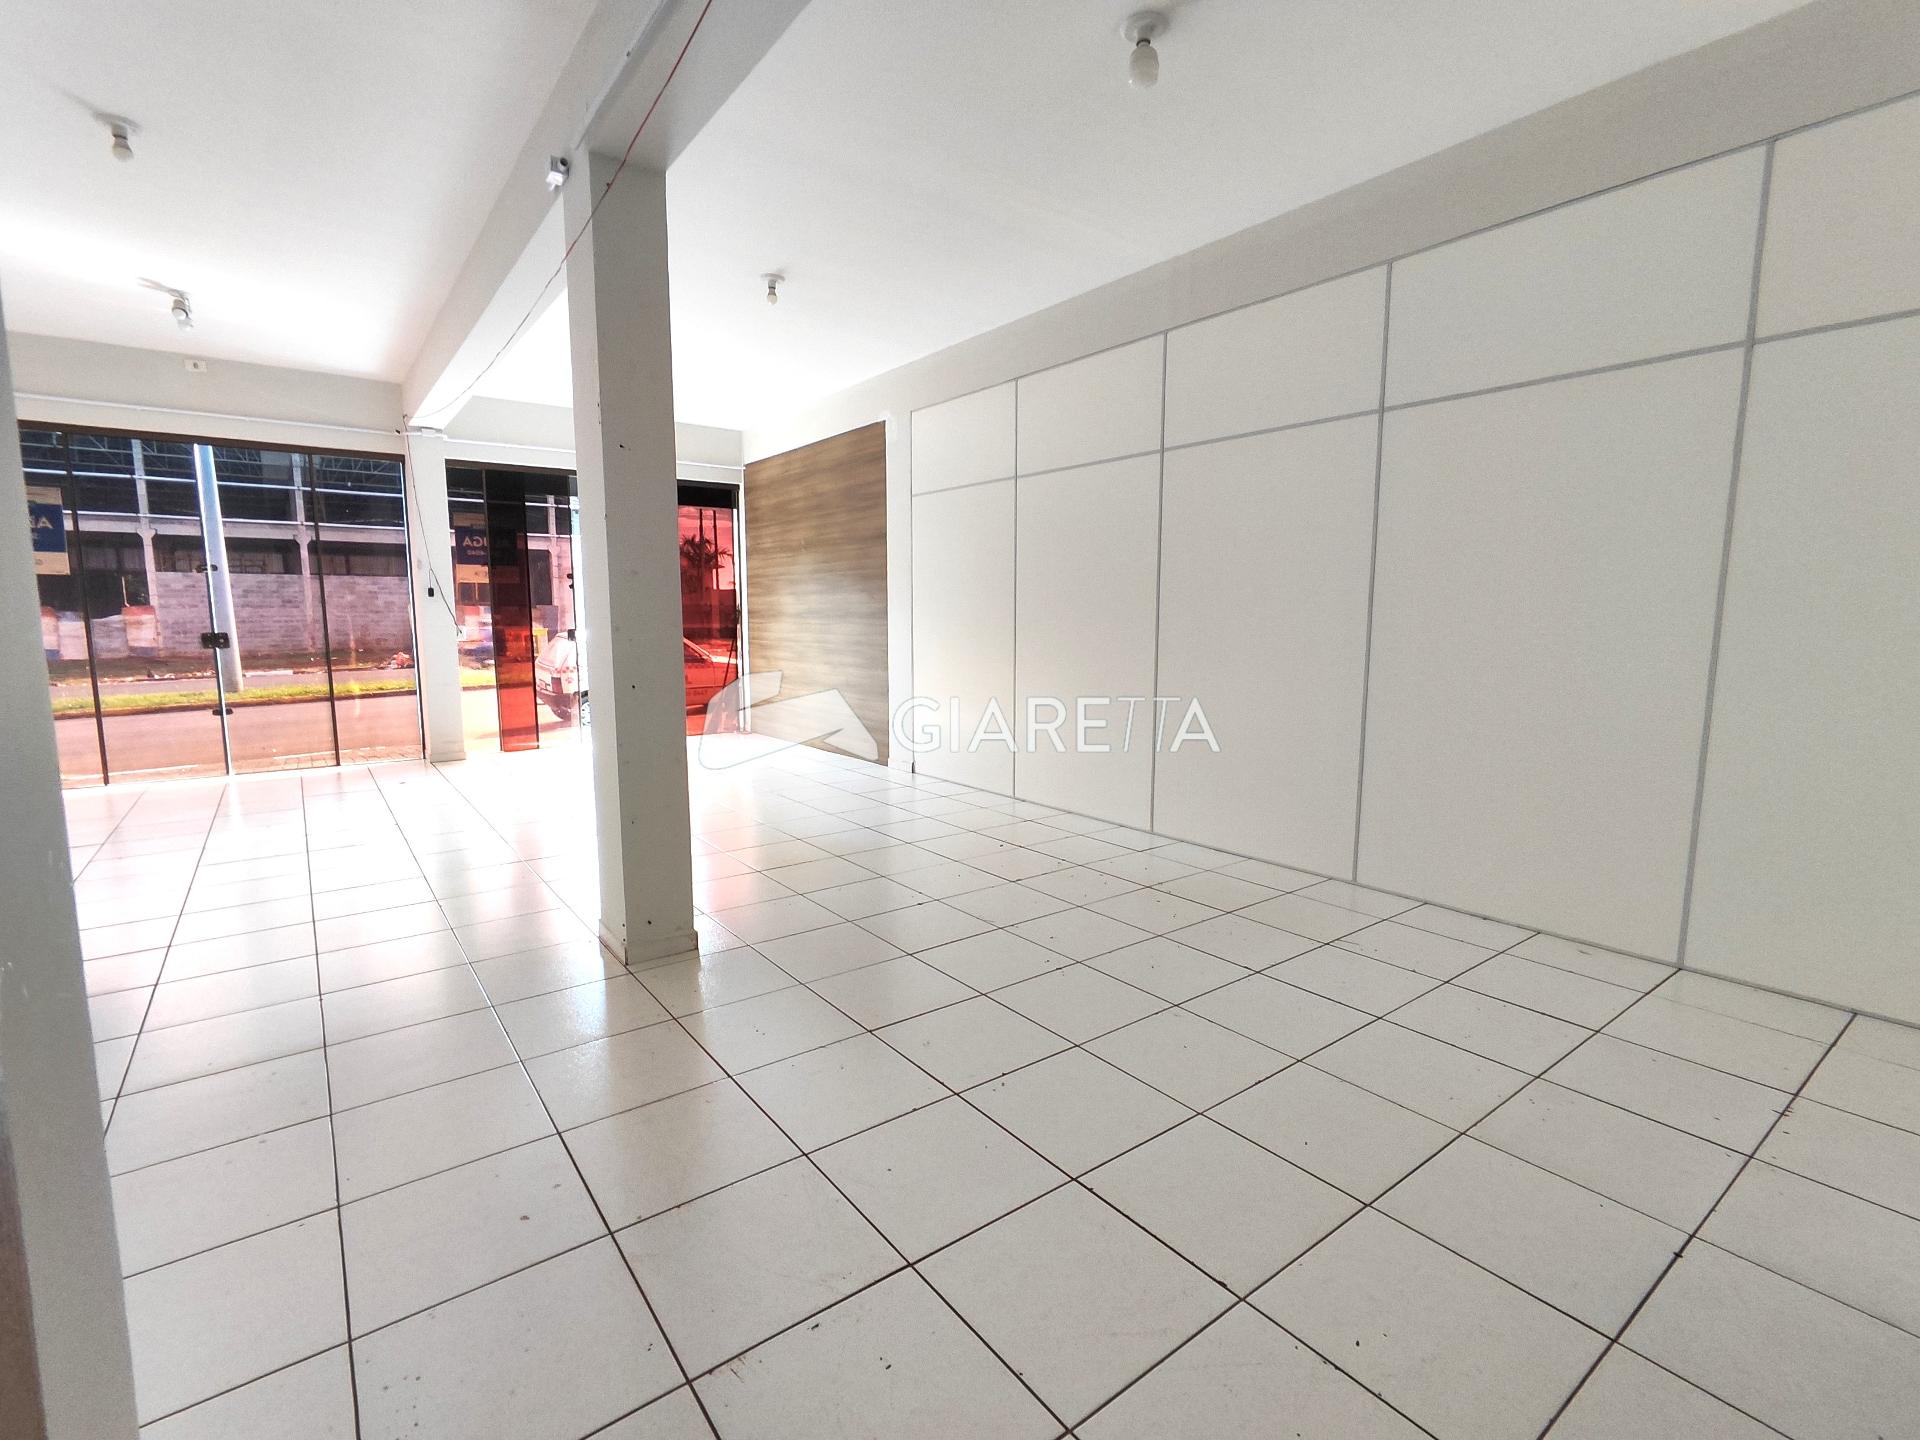 Sala-Conjunto, 53 m² - Foto 2